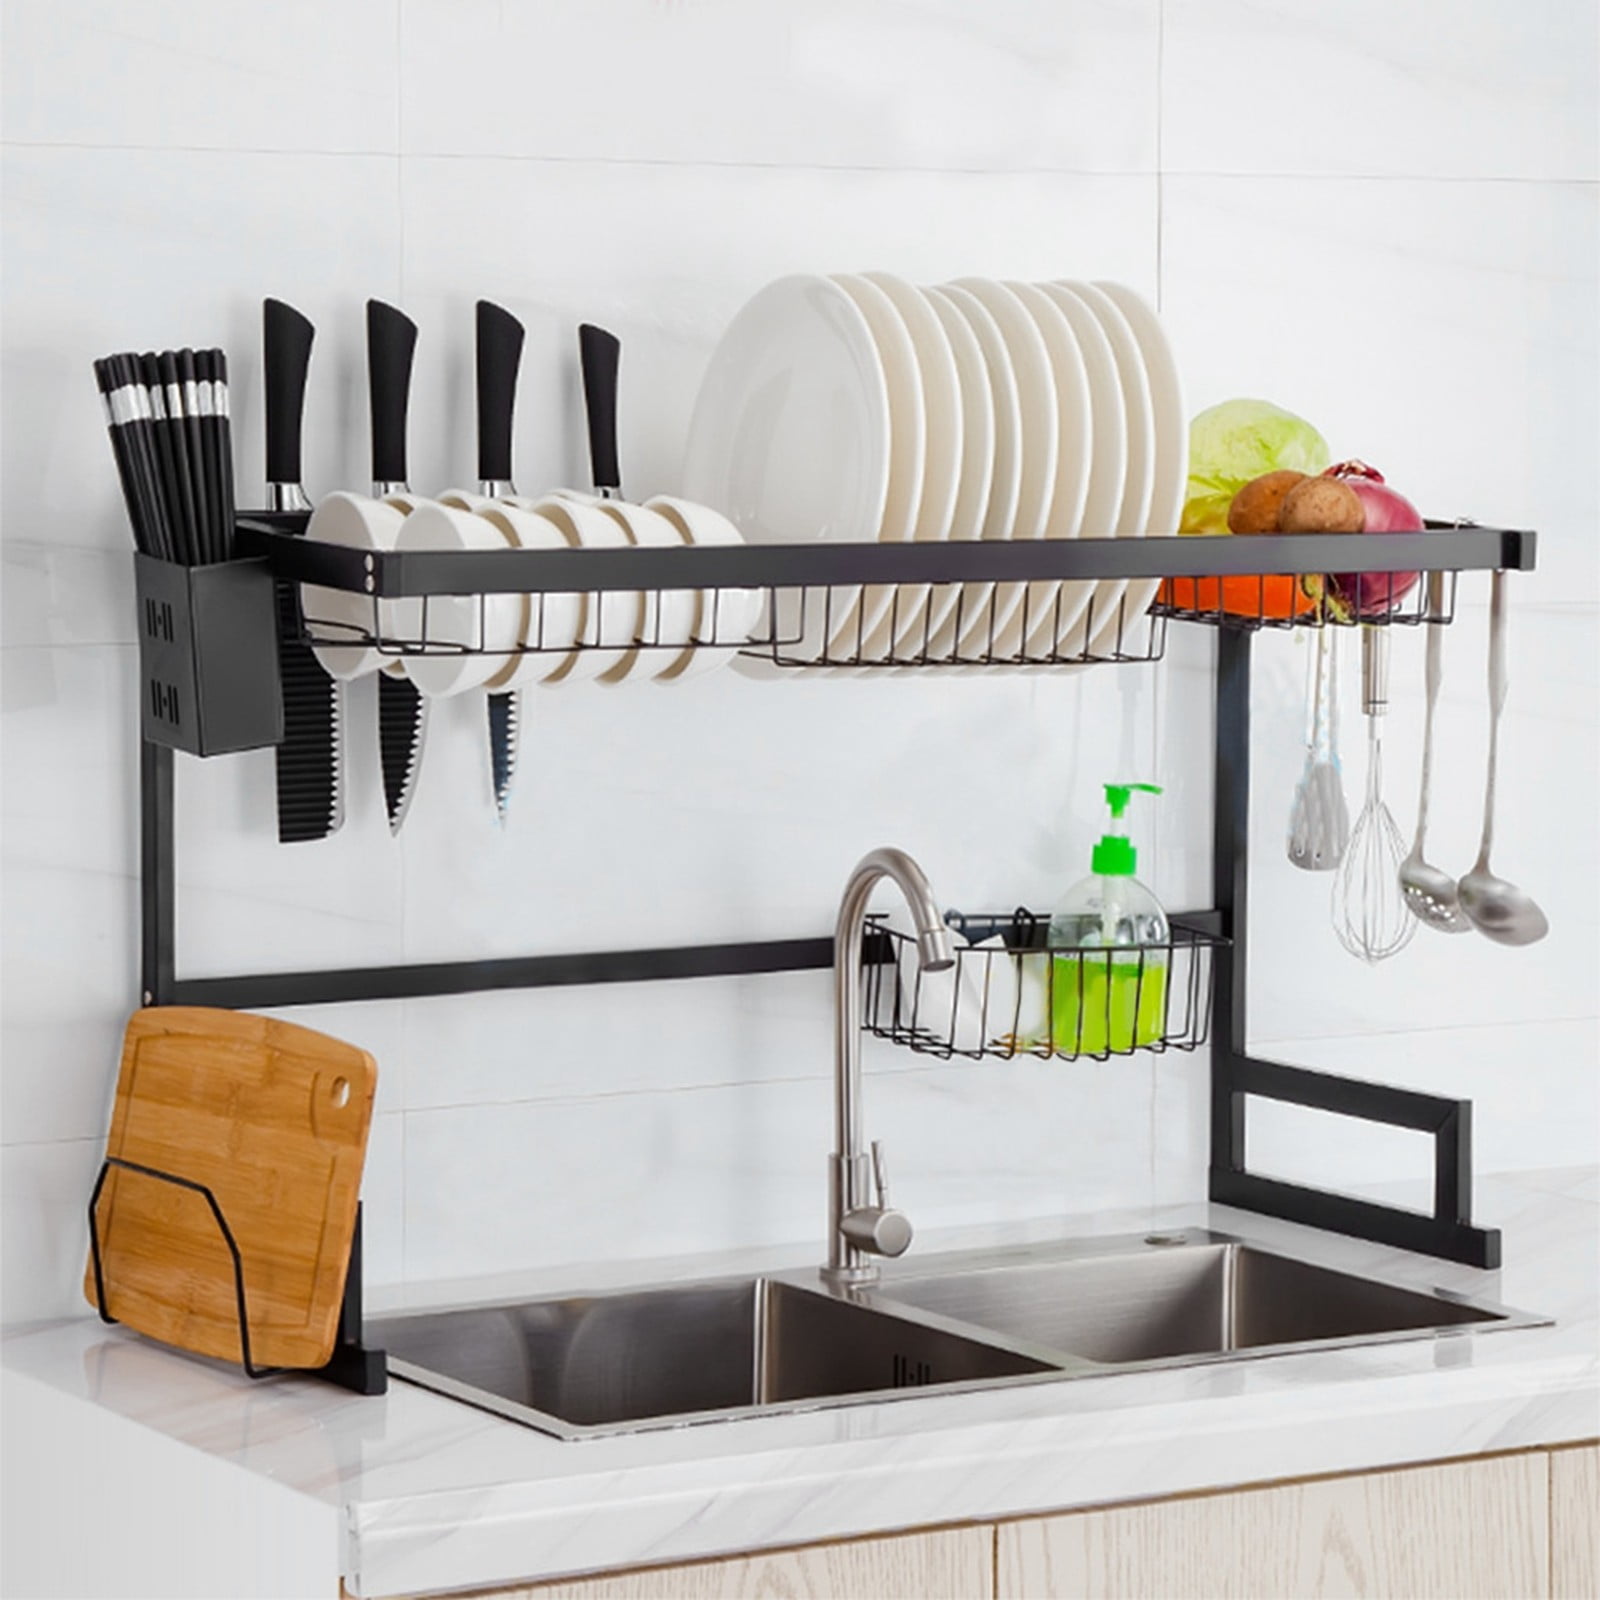 Details about   Over Sink Dish Drying Rack Drainer Kitchen Cutlery Storage Holder Shelf Steel 